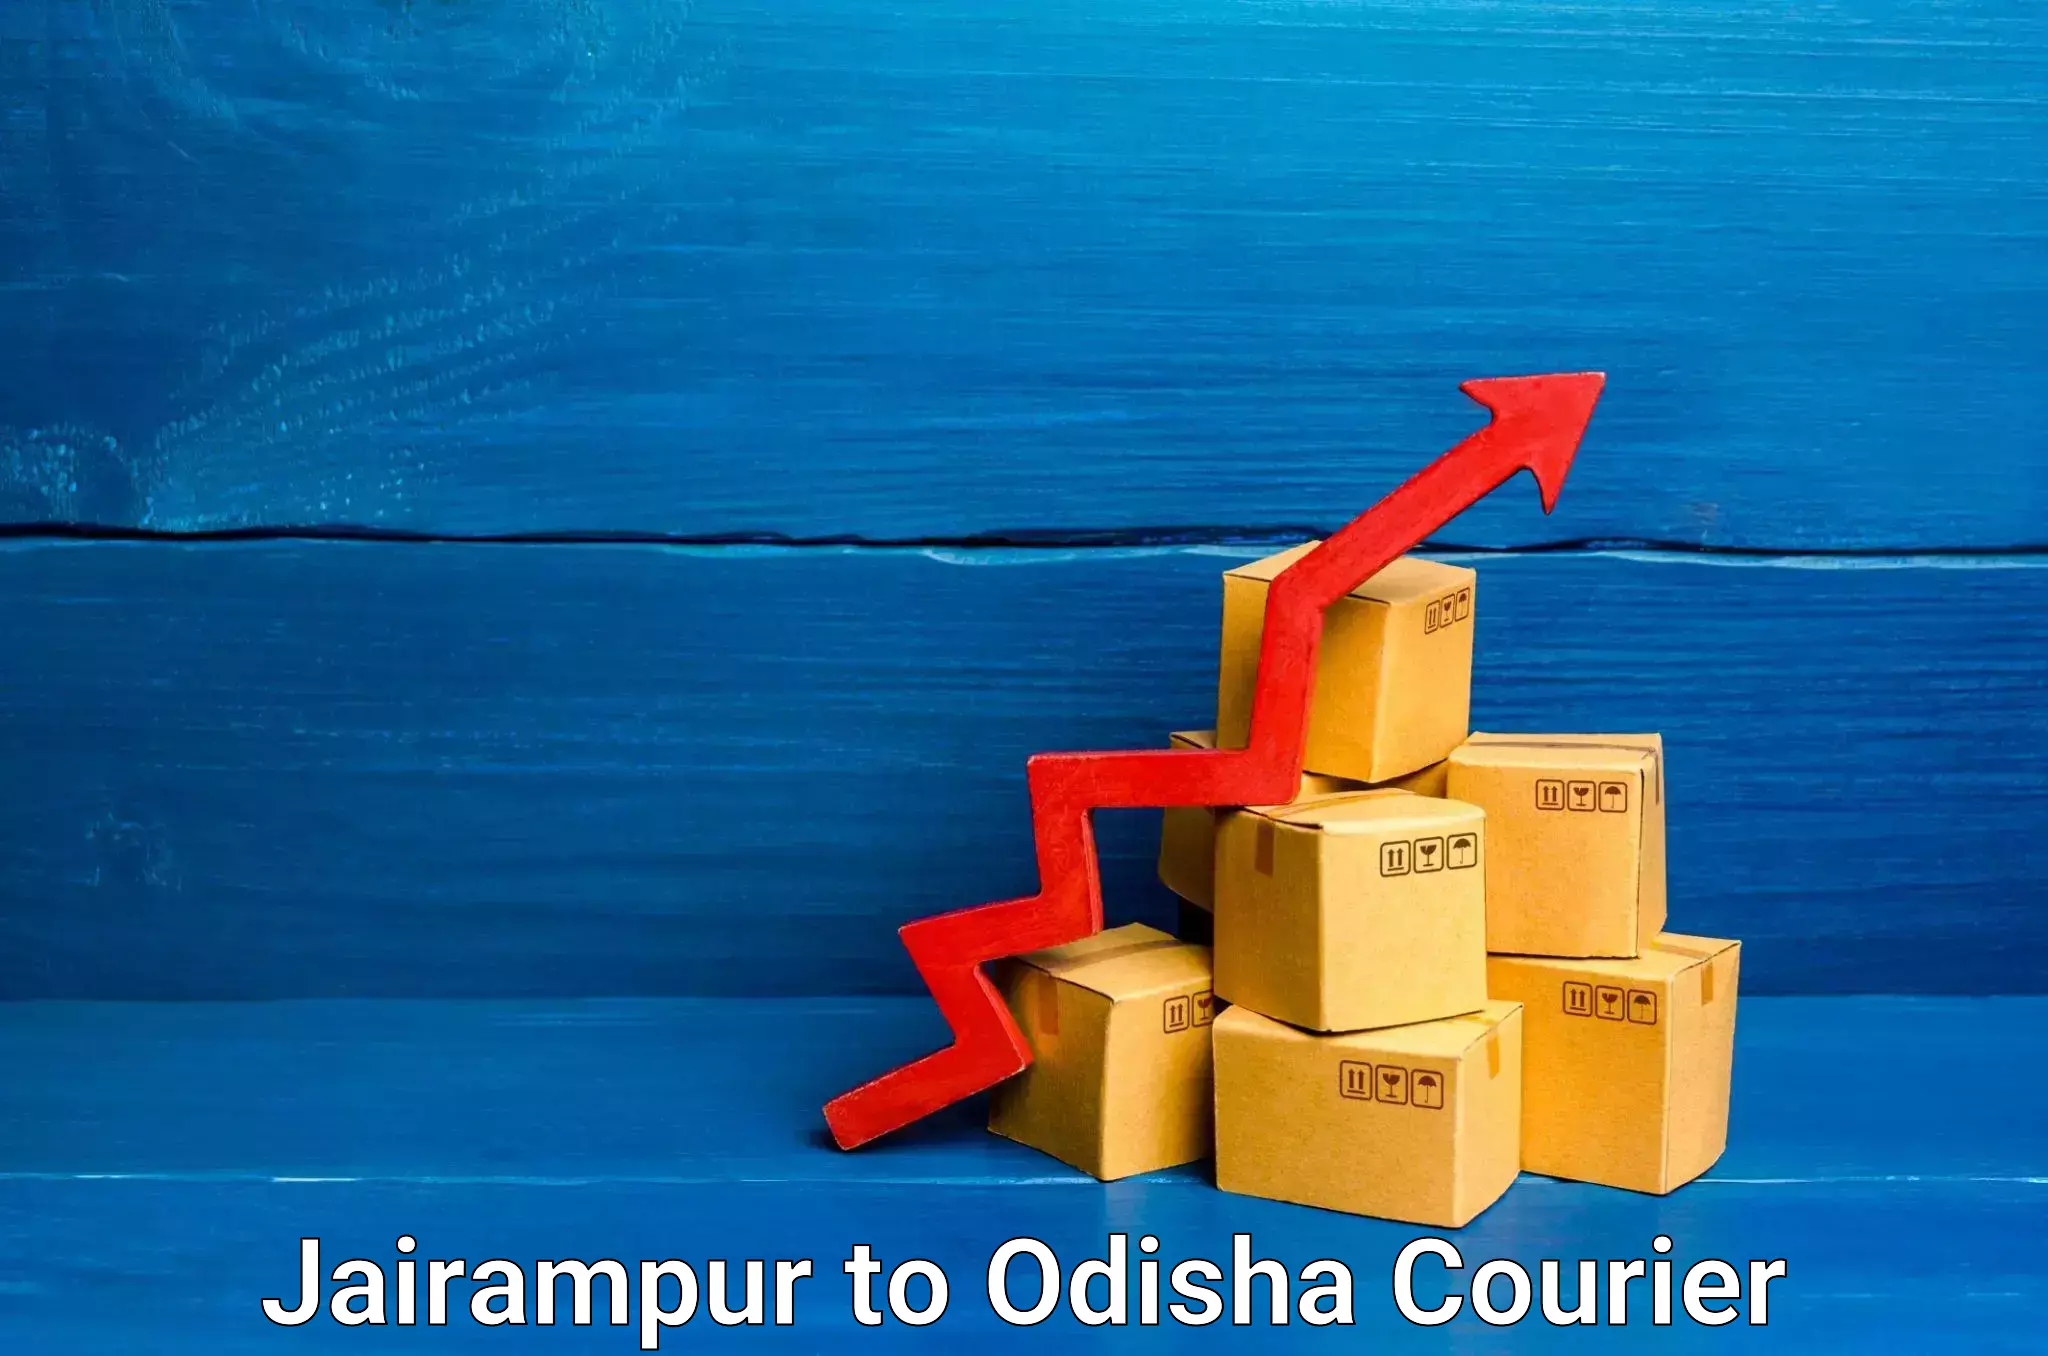 Courier service comparison Jairampur to Mayurbhanj